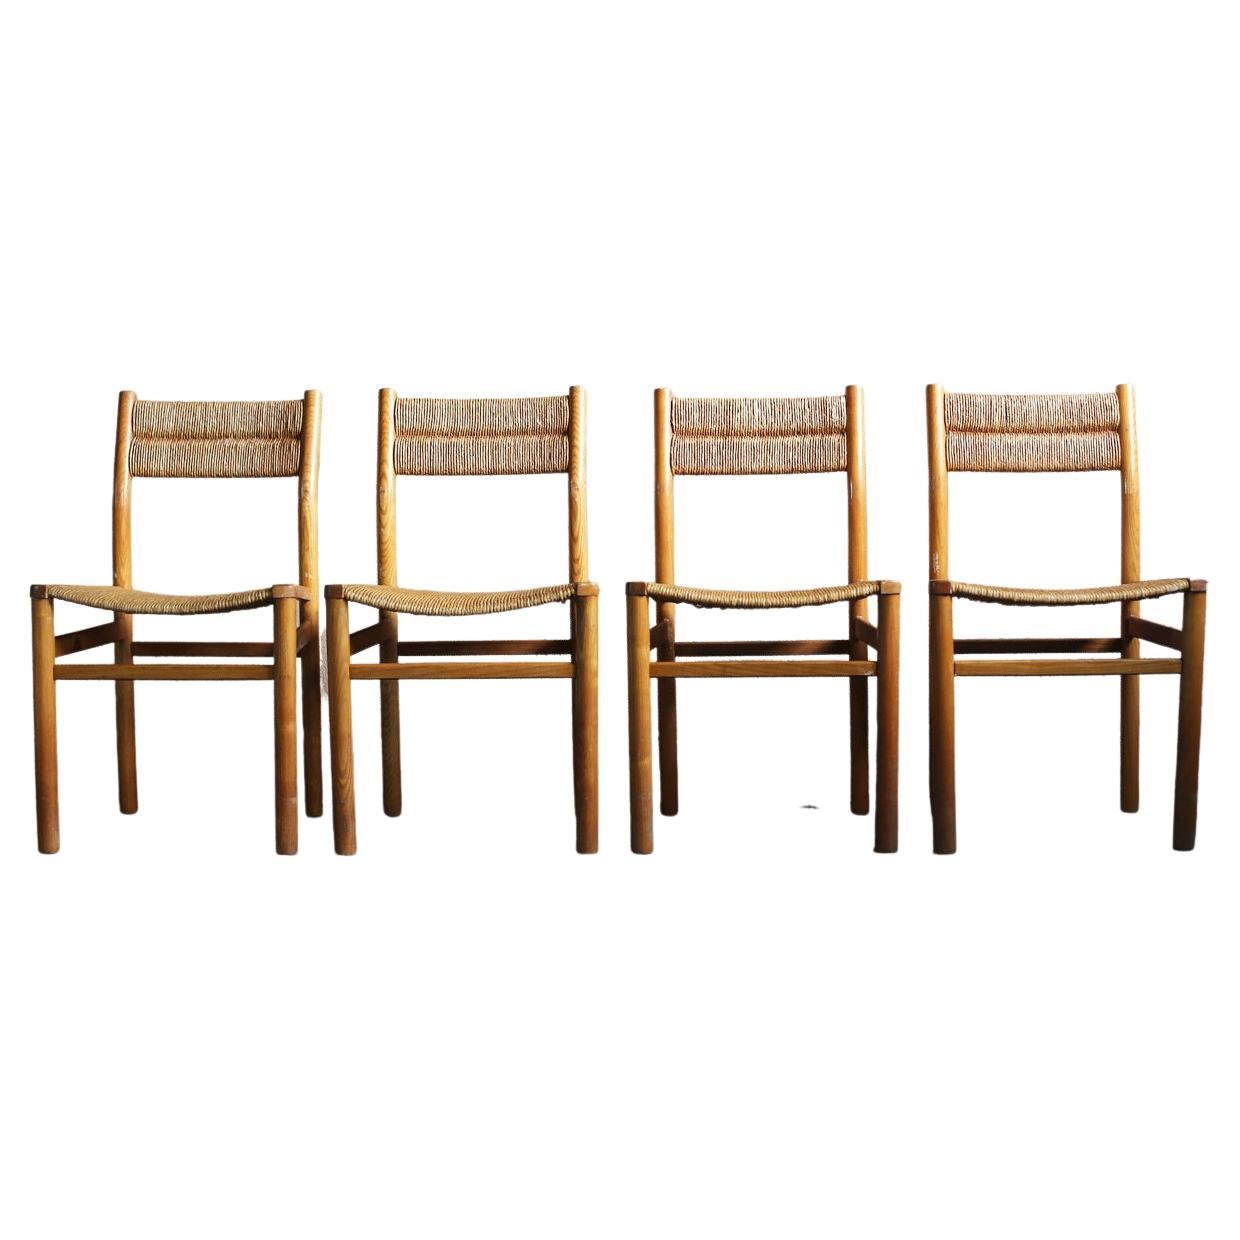 4 Chairs by Pierre Gautier-Delaye, Model Week-End